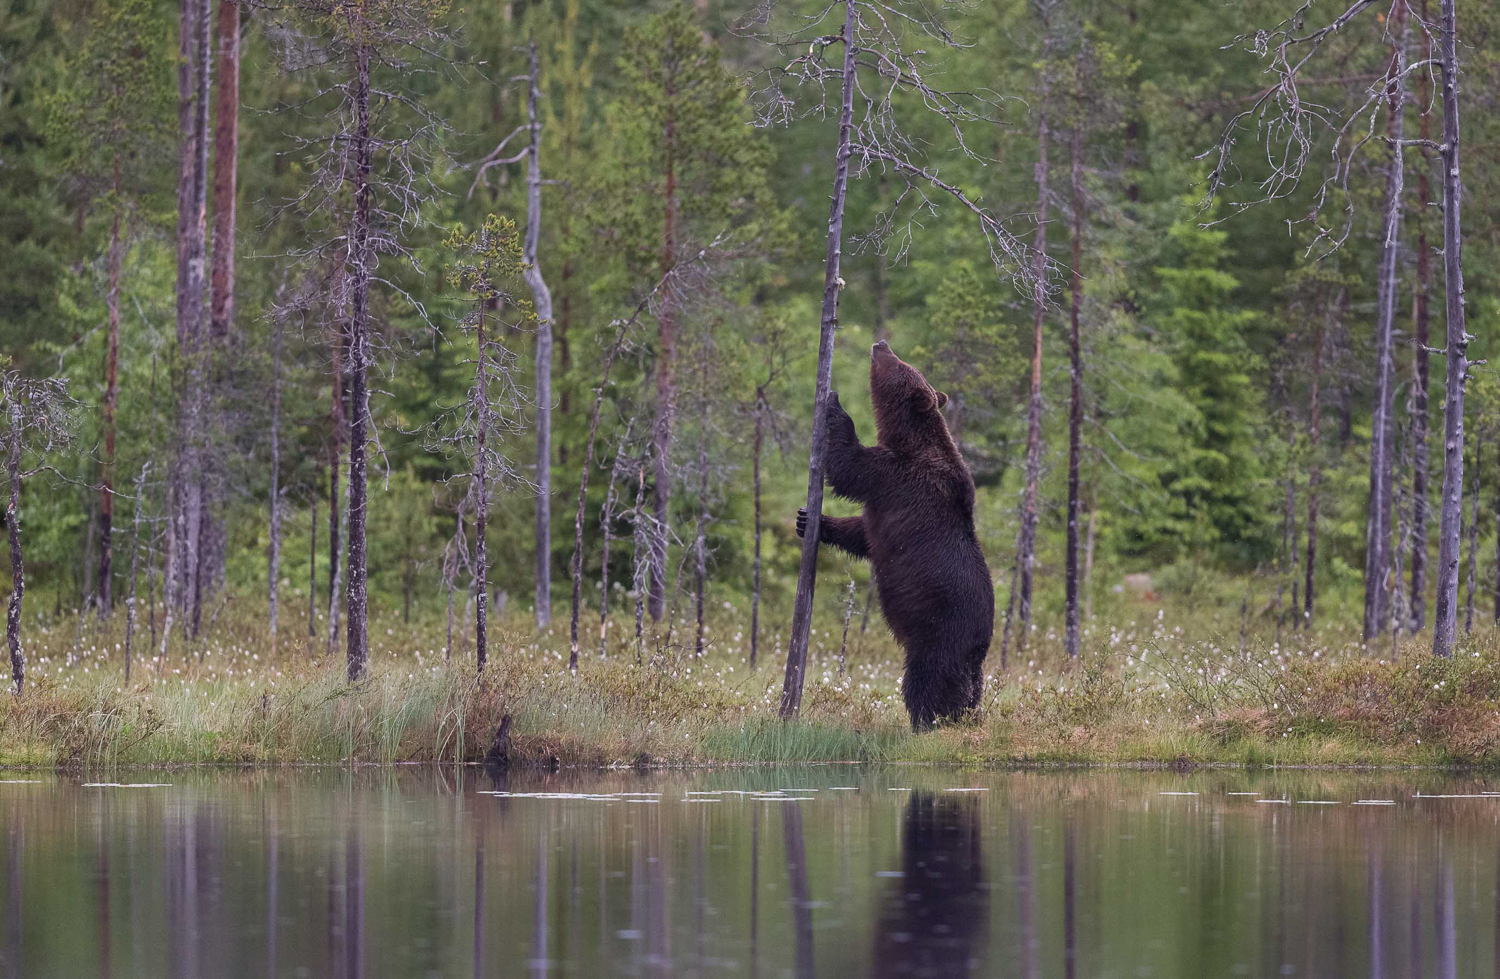 Brown bear photography tour Finland-4.jpg